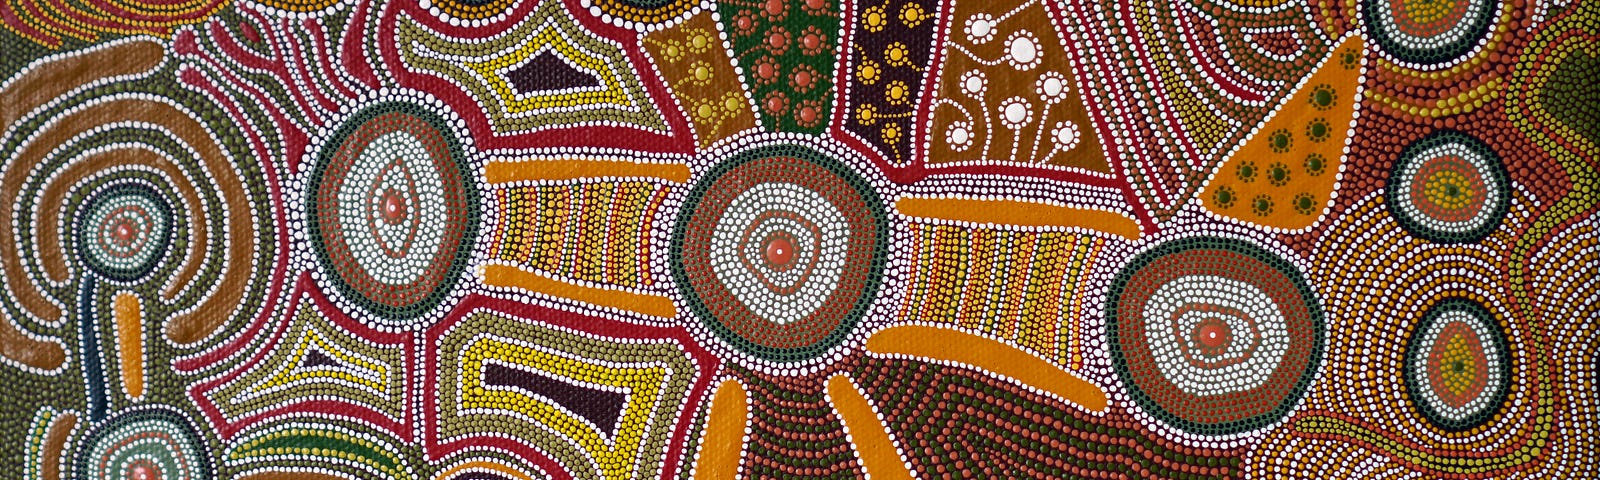 Aboriginal style dot painting